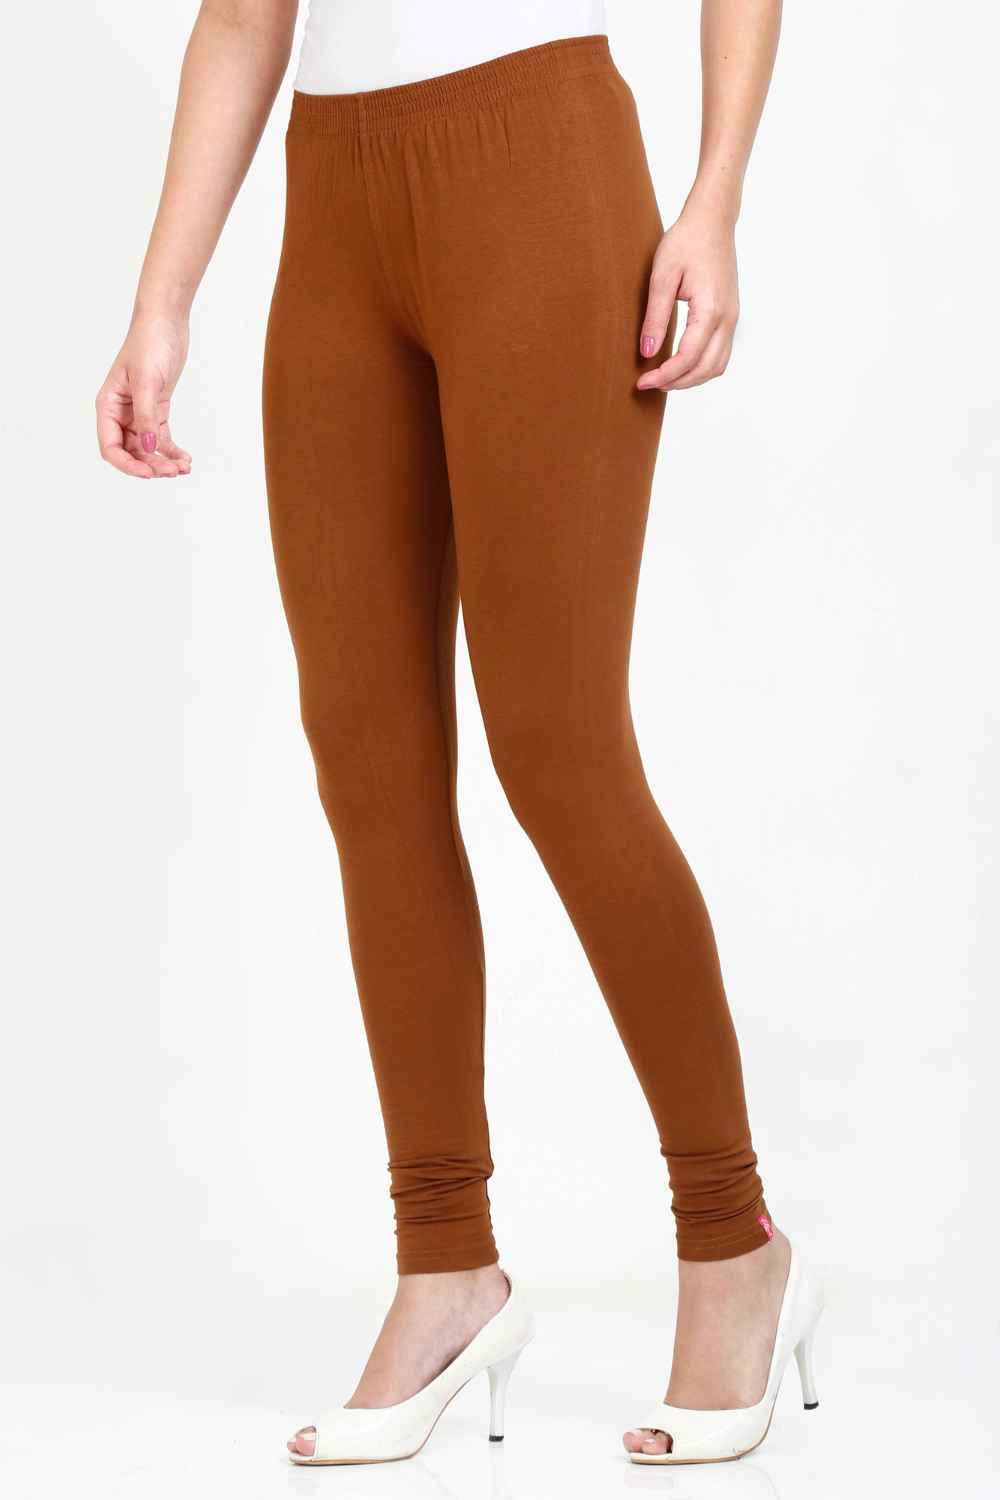 Mid Waist Dark Brown Cotton Lycra Ankle Length Leggings, Casual